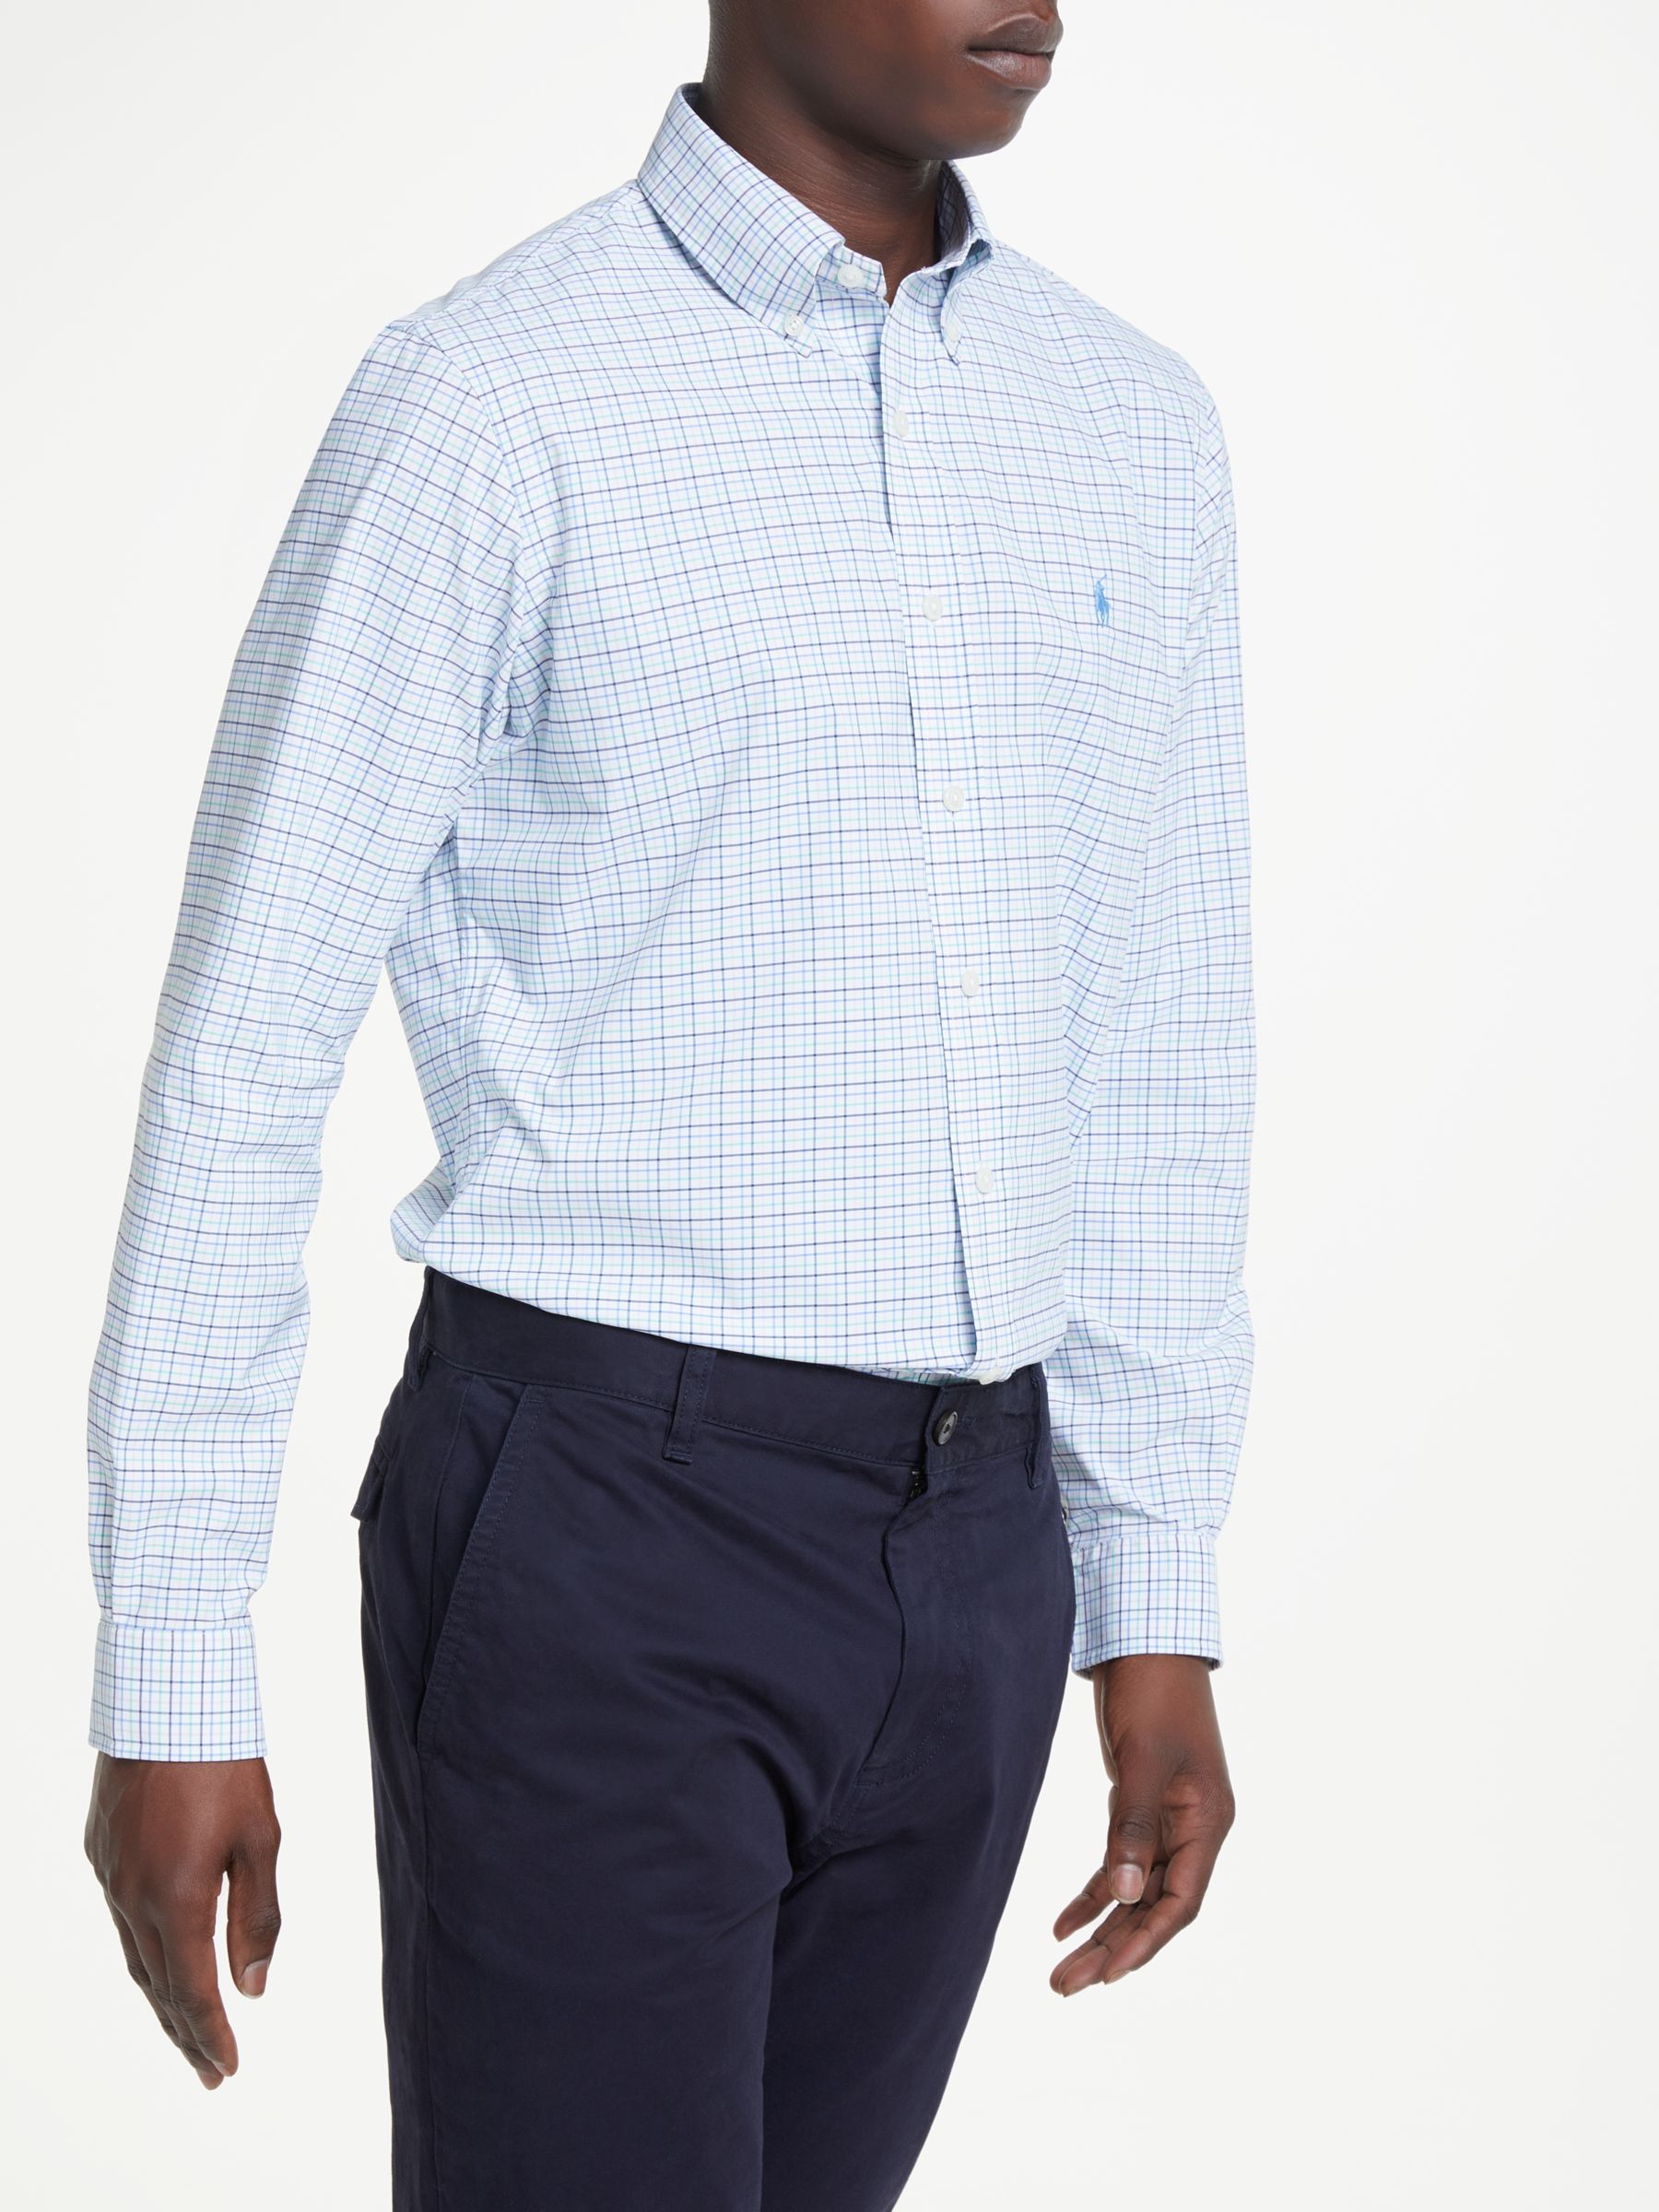 Polo Golf by Ralph Lauren Button Down Shirt, Multi